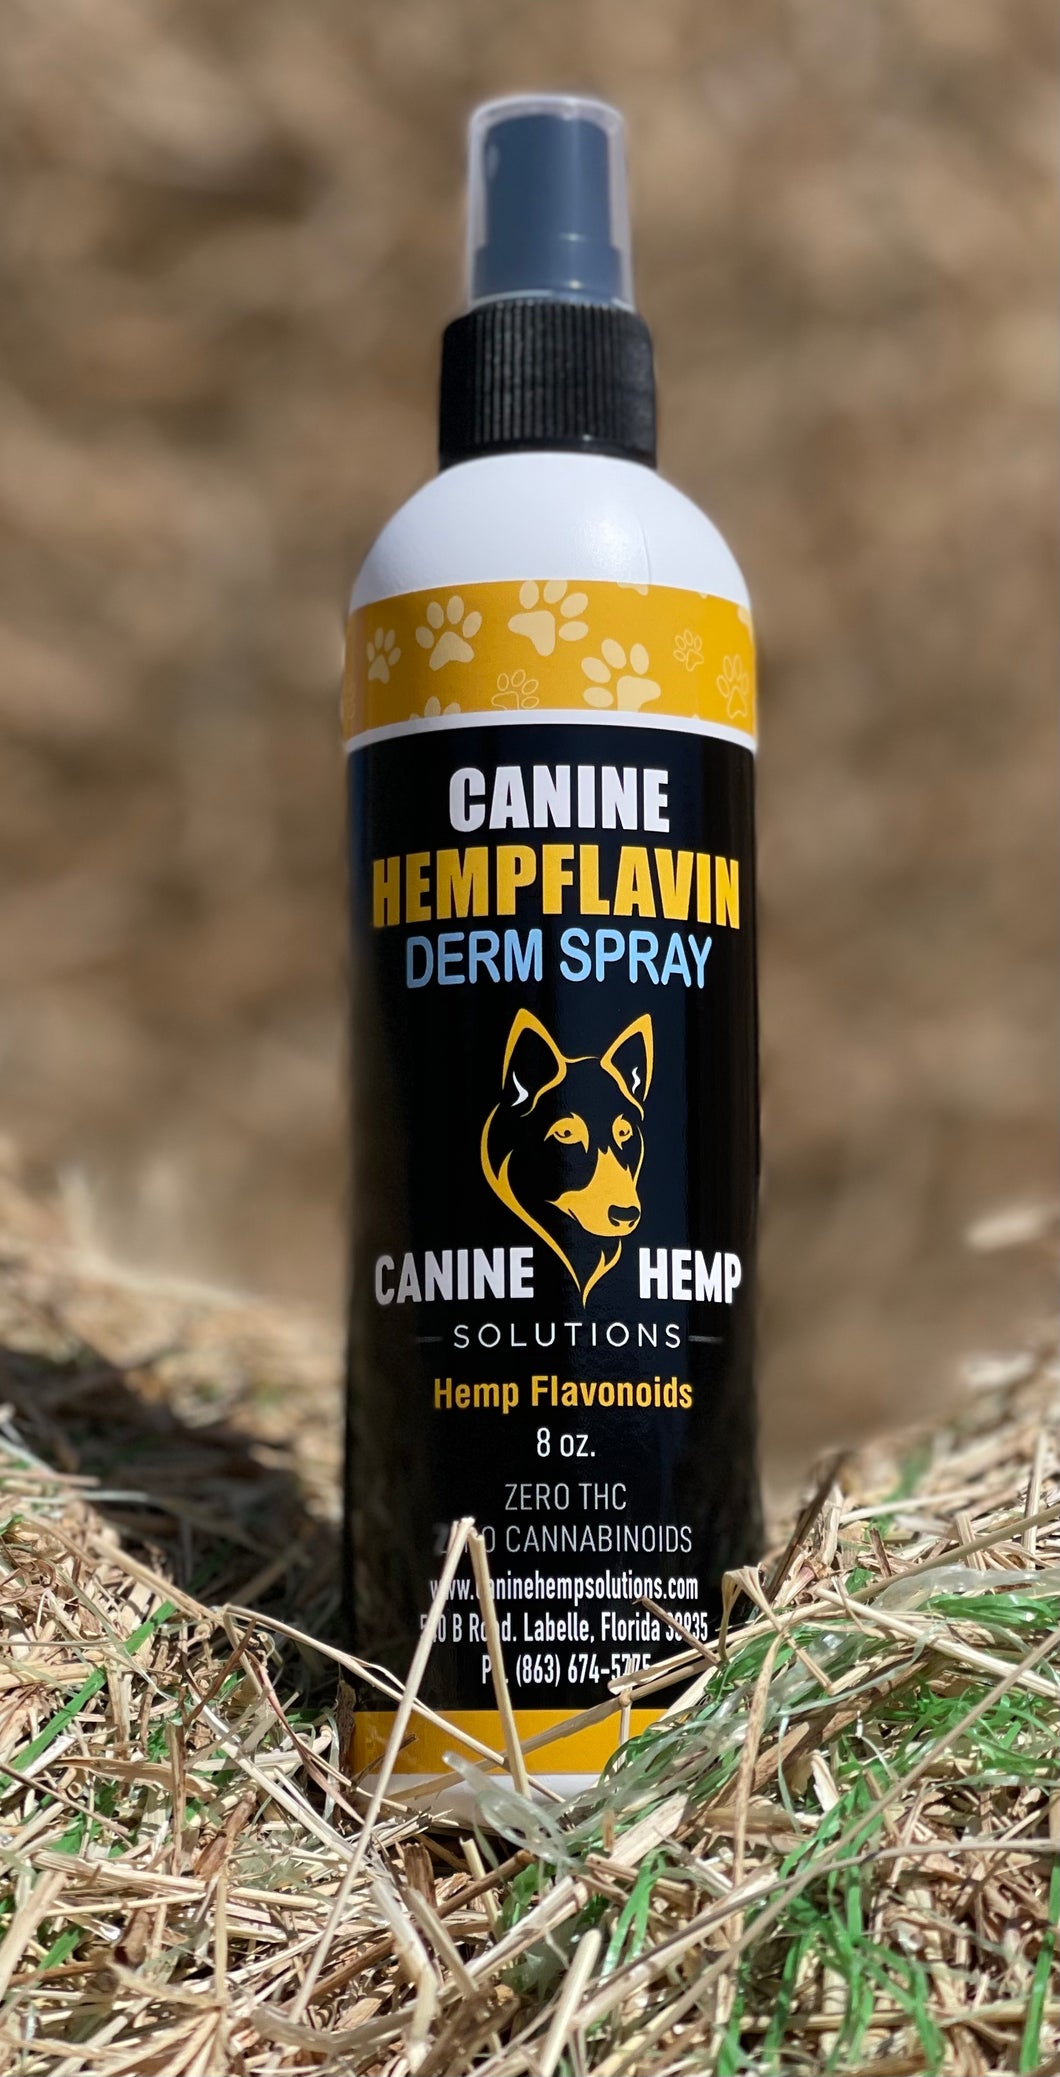 Canine Hempflavin Derm Spray